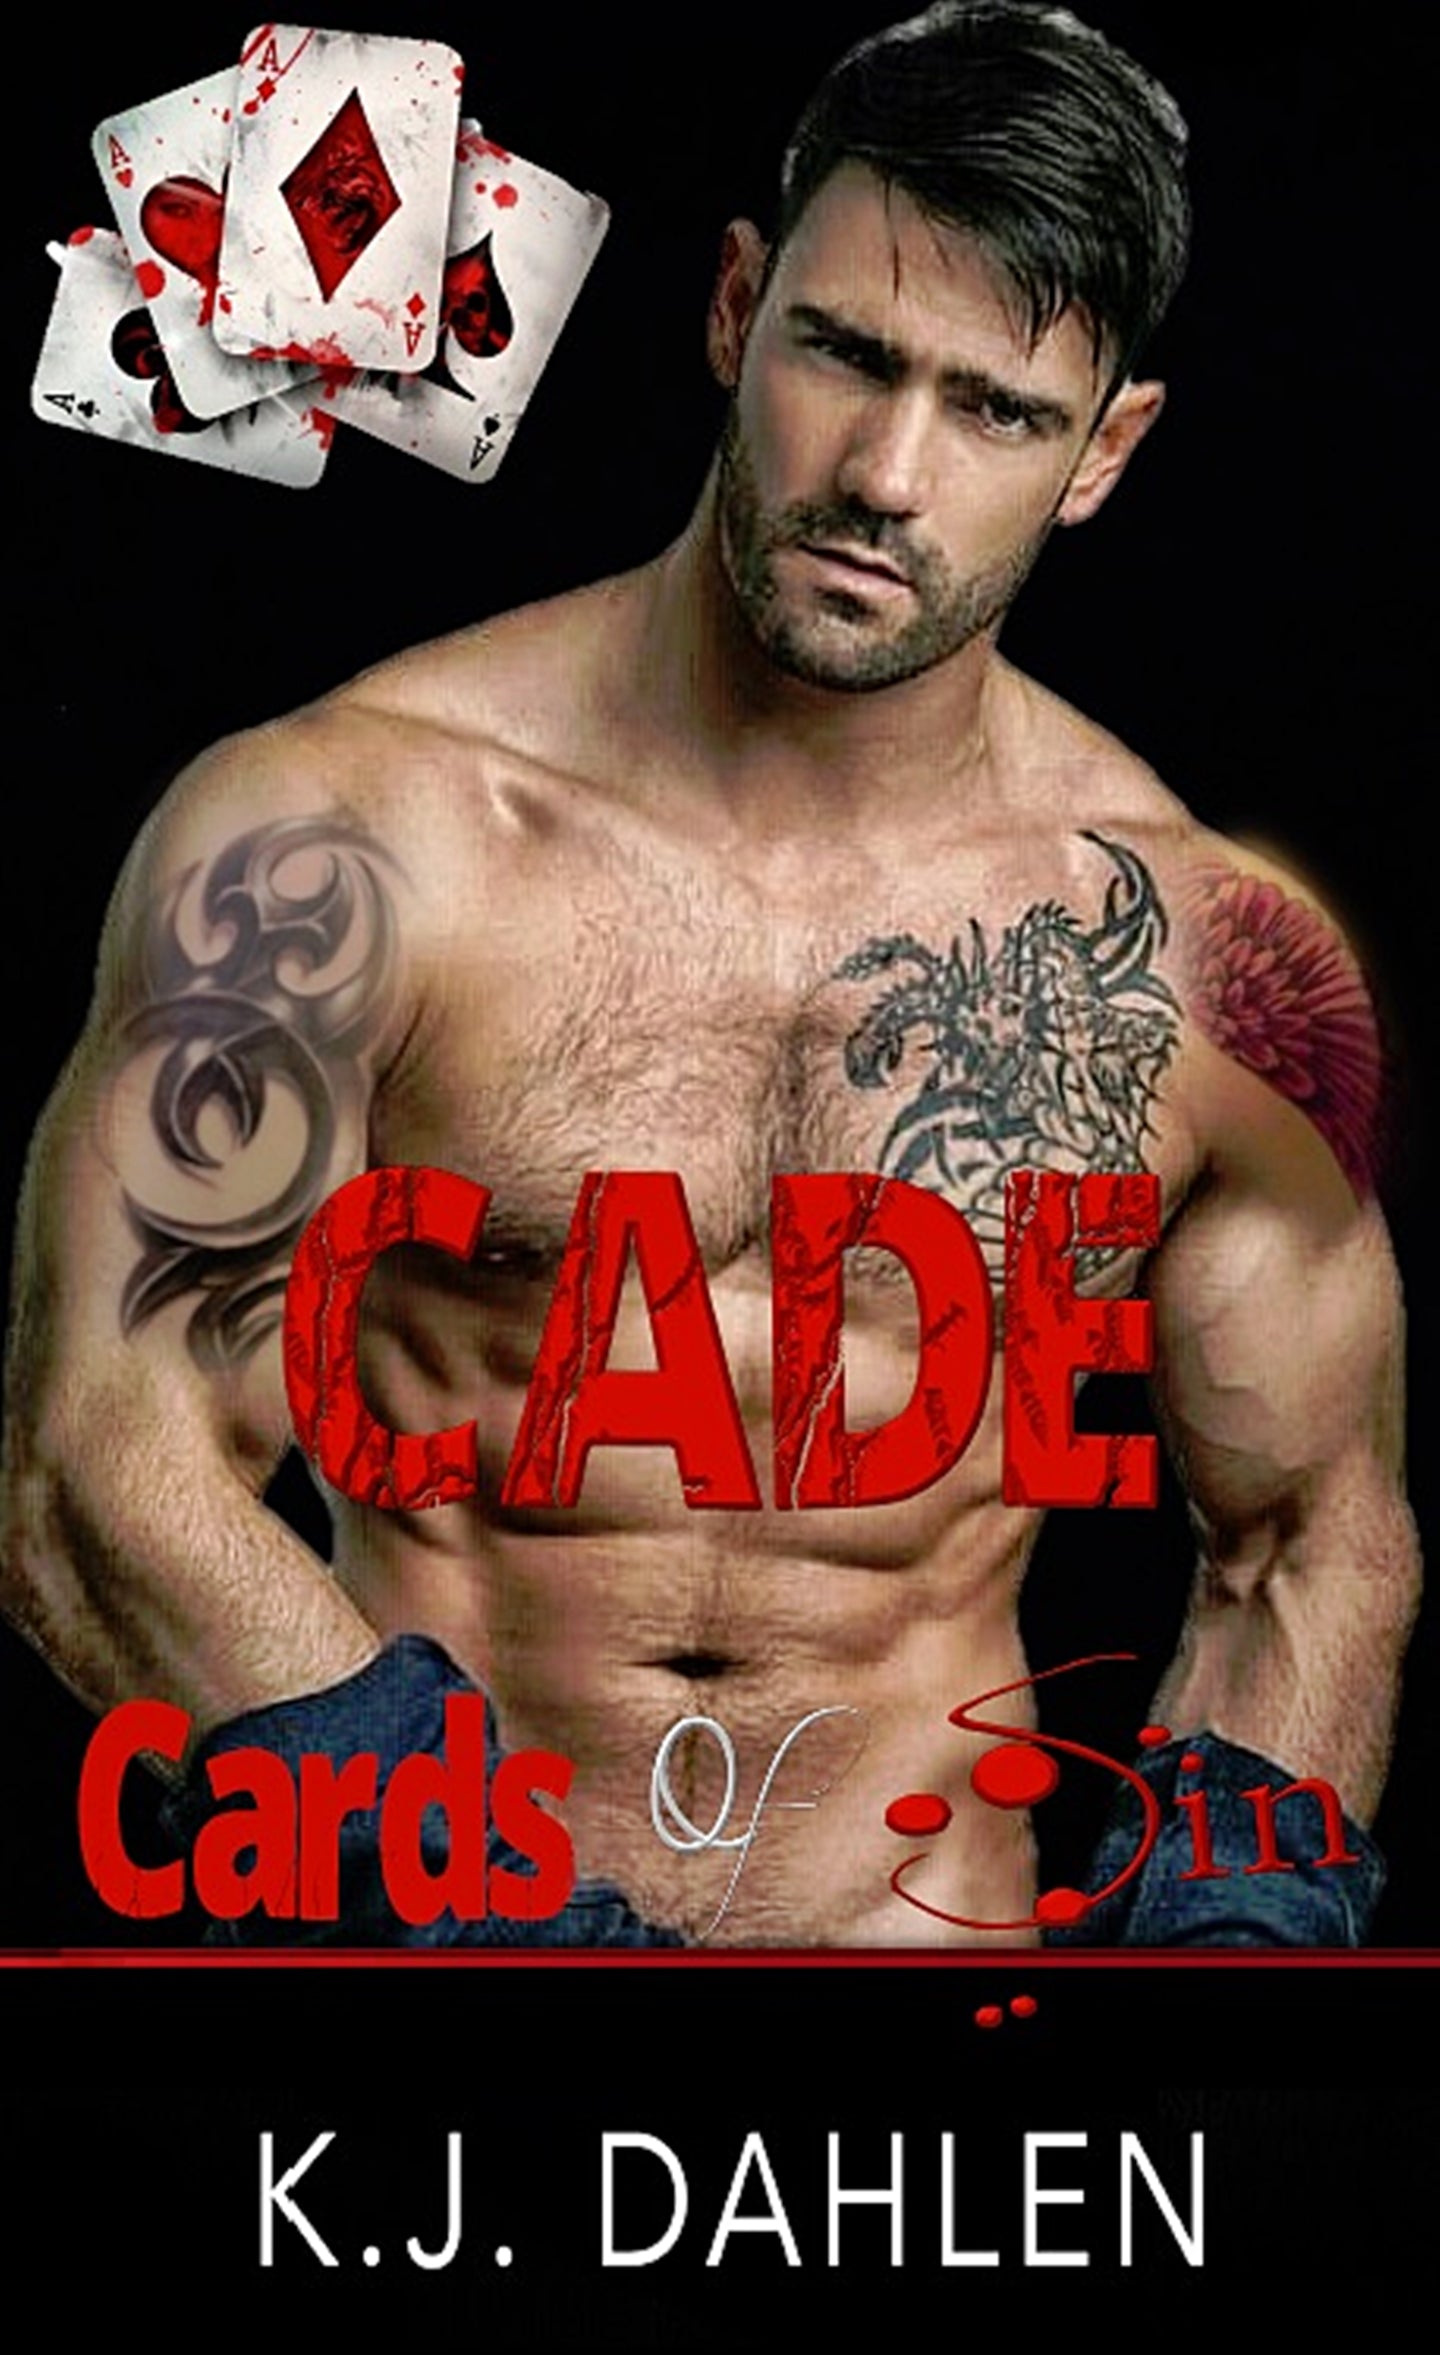 Cade-Cards Of Sin-single